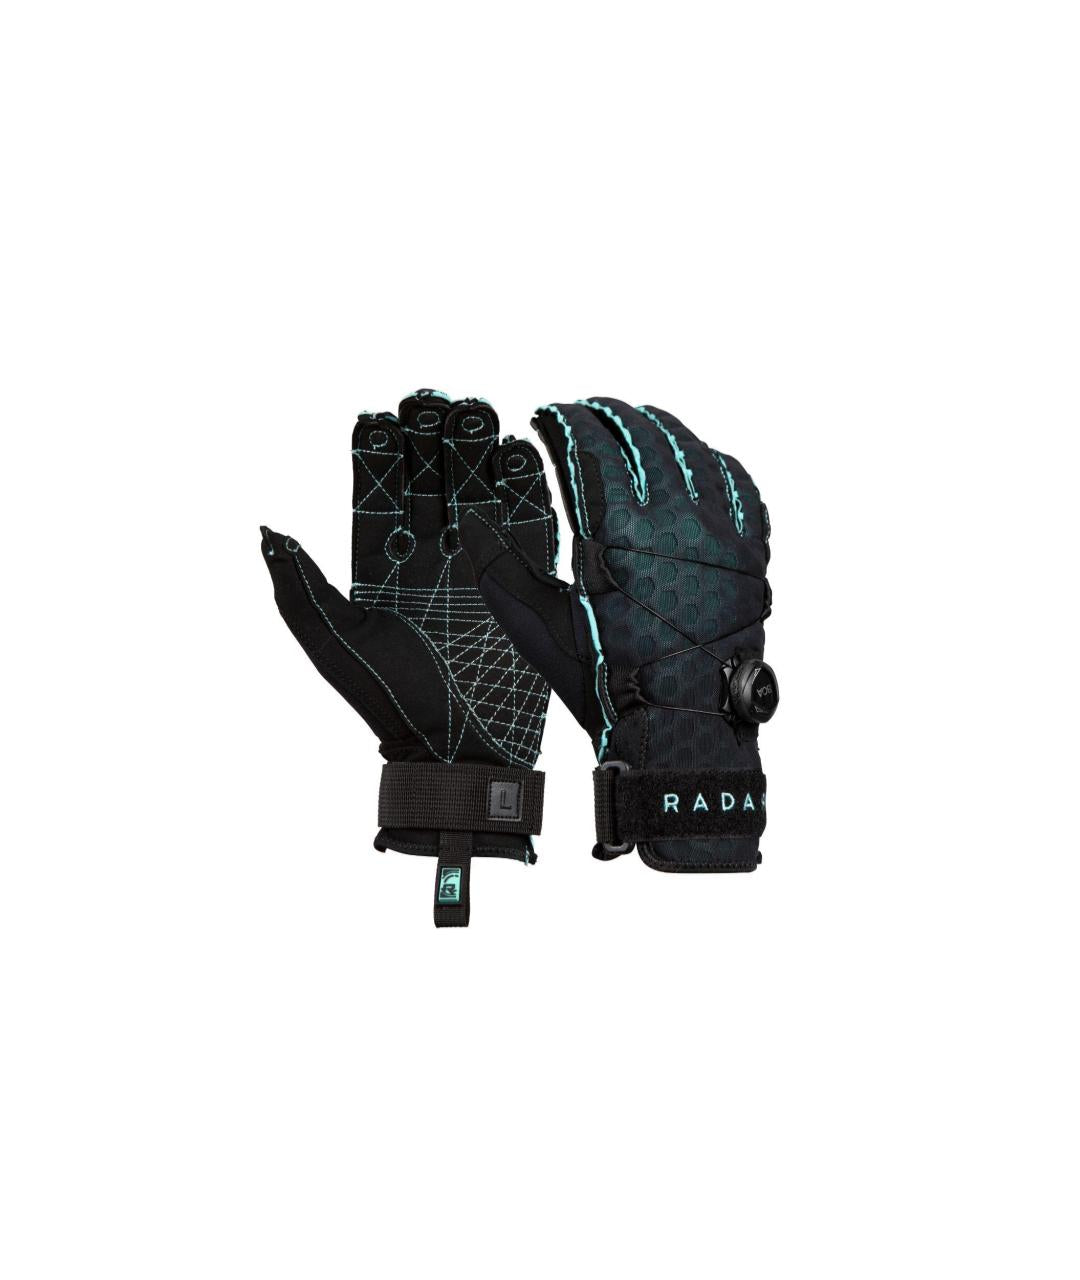 Vapor-A Boa Inside-Out Glove ll L